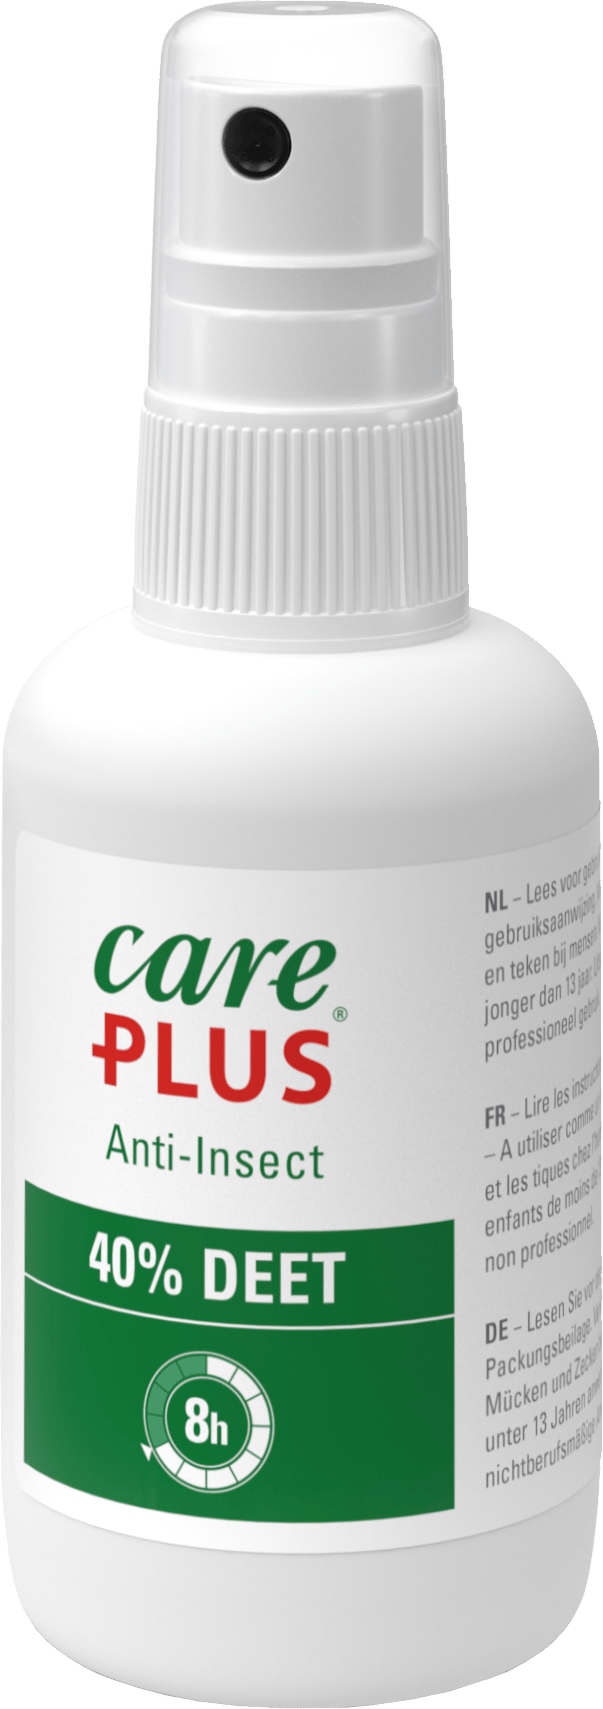 Care Plus Anti-Insect DEET 40% 60 ml Nocolour Care Plus